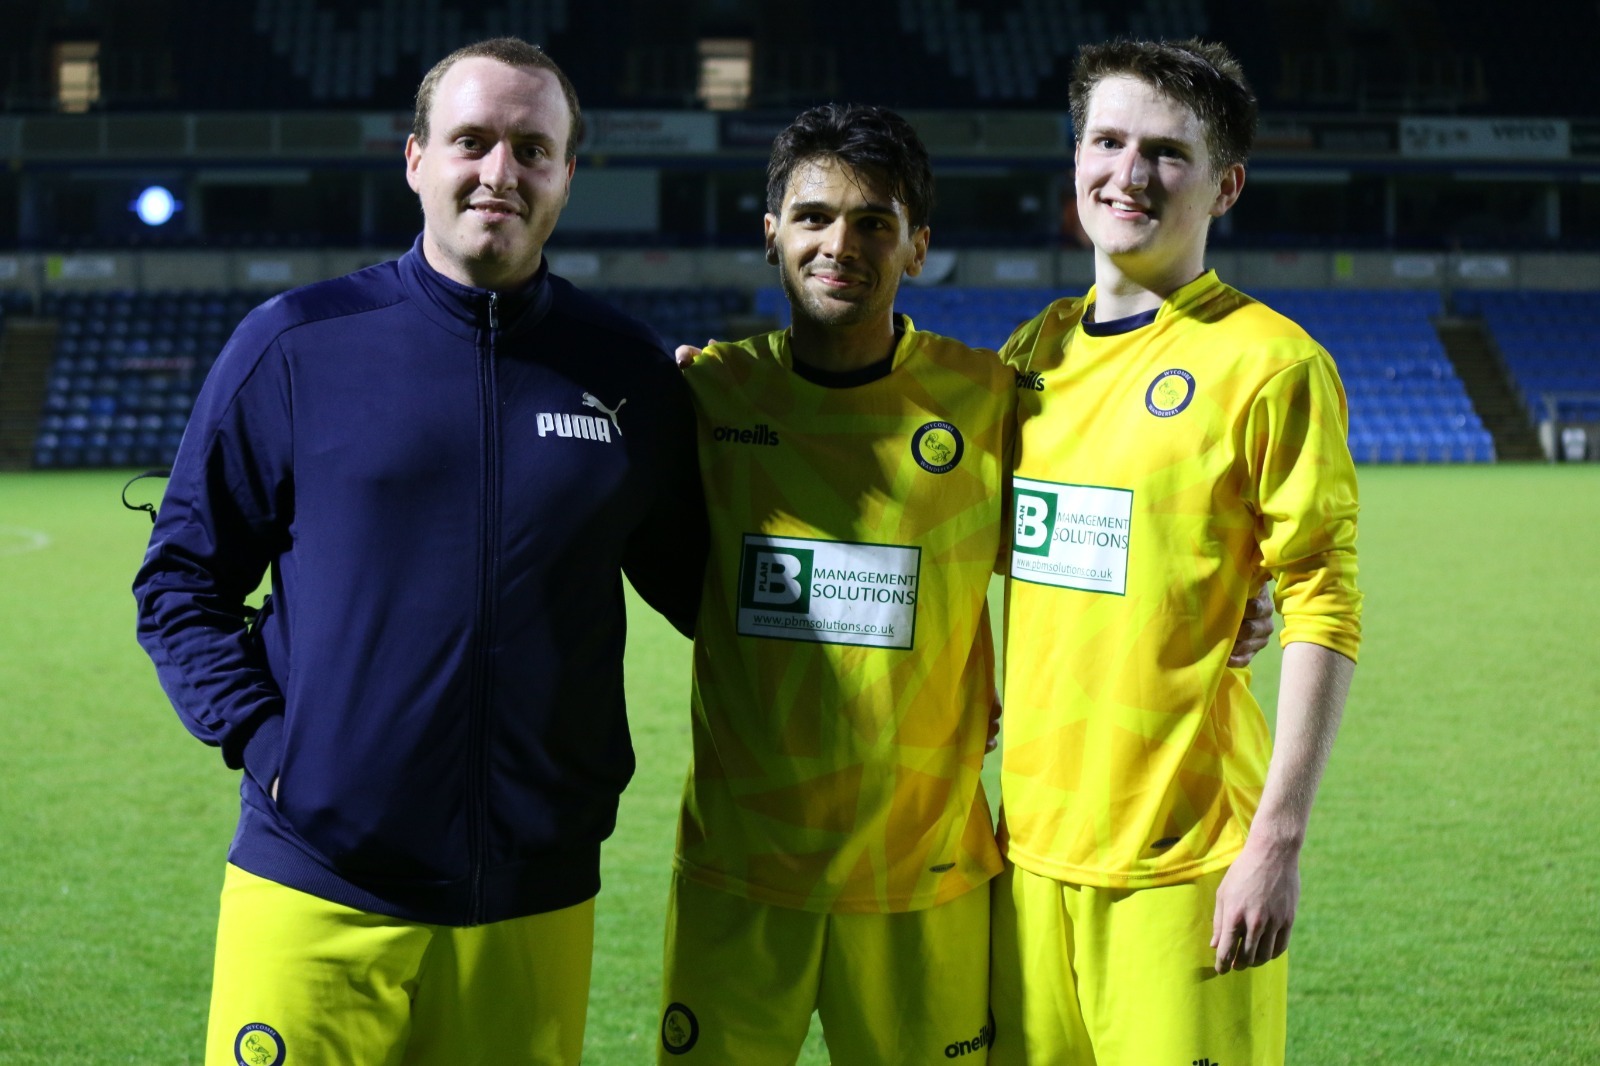 Matt, myself and Tom Baldwin - Tom has been part of the Wycombe media team this season (Photo by Sarah Hussain)